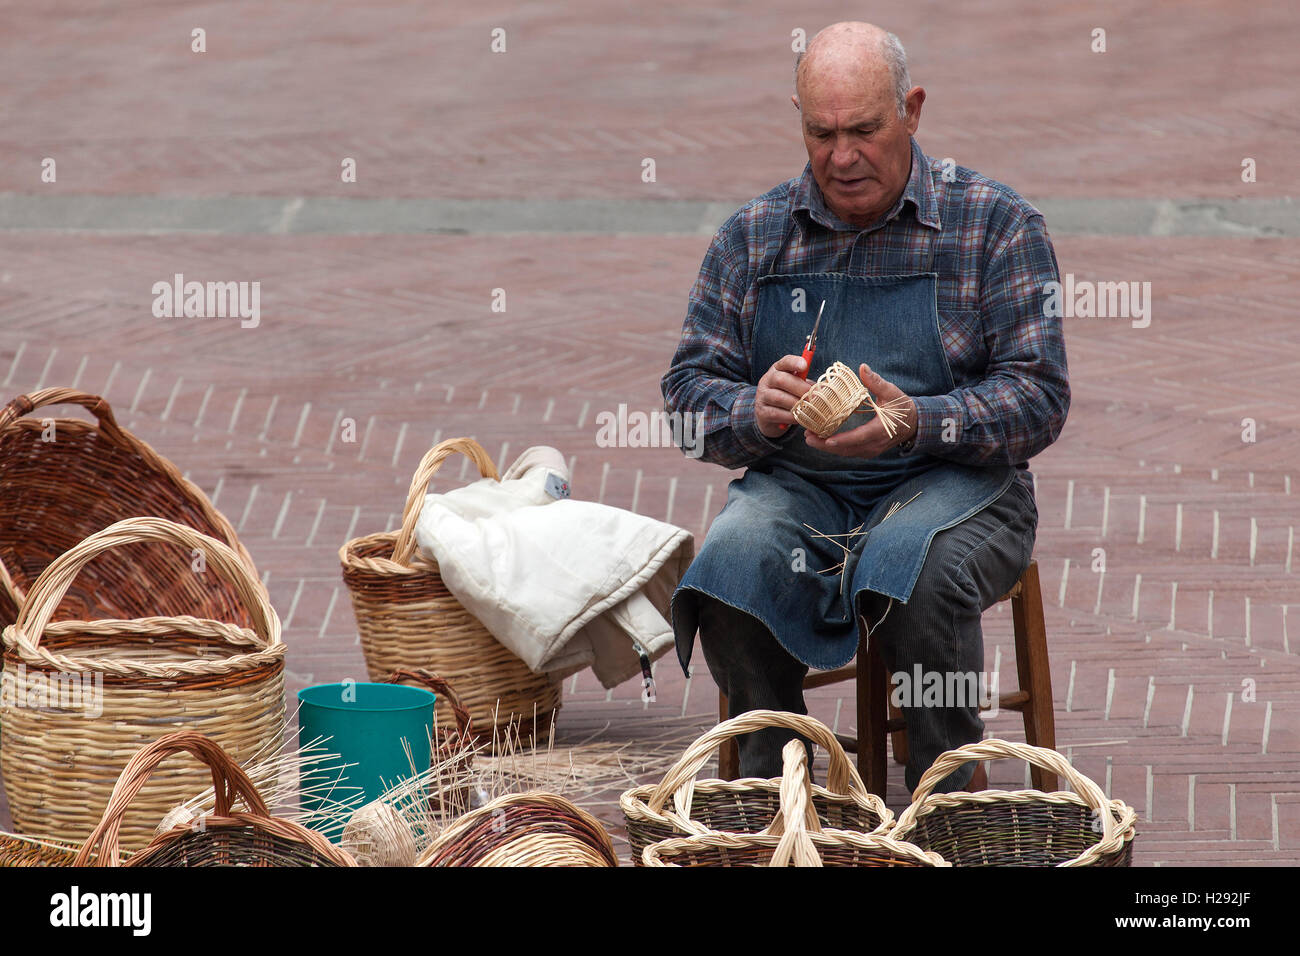 Basket weaver, man on Piazza delle Erbe making baskets, San Gimignano, Province of Siena, Tuscany, Italy Stock Photo